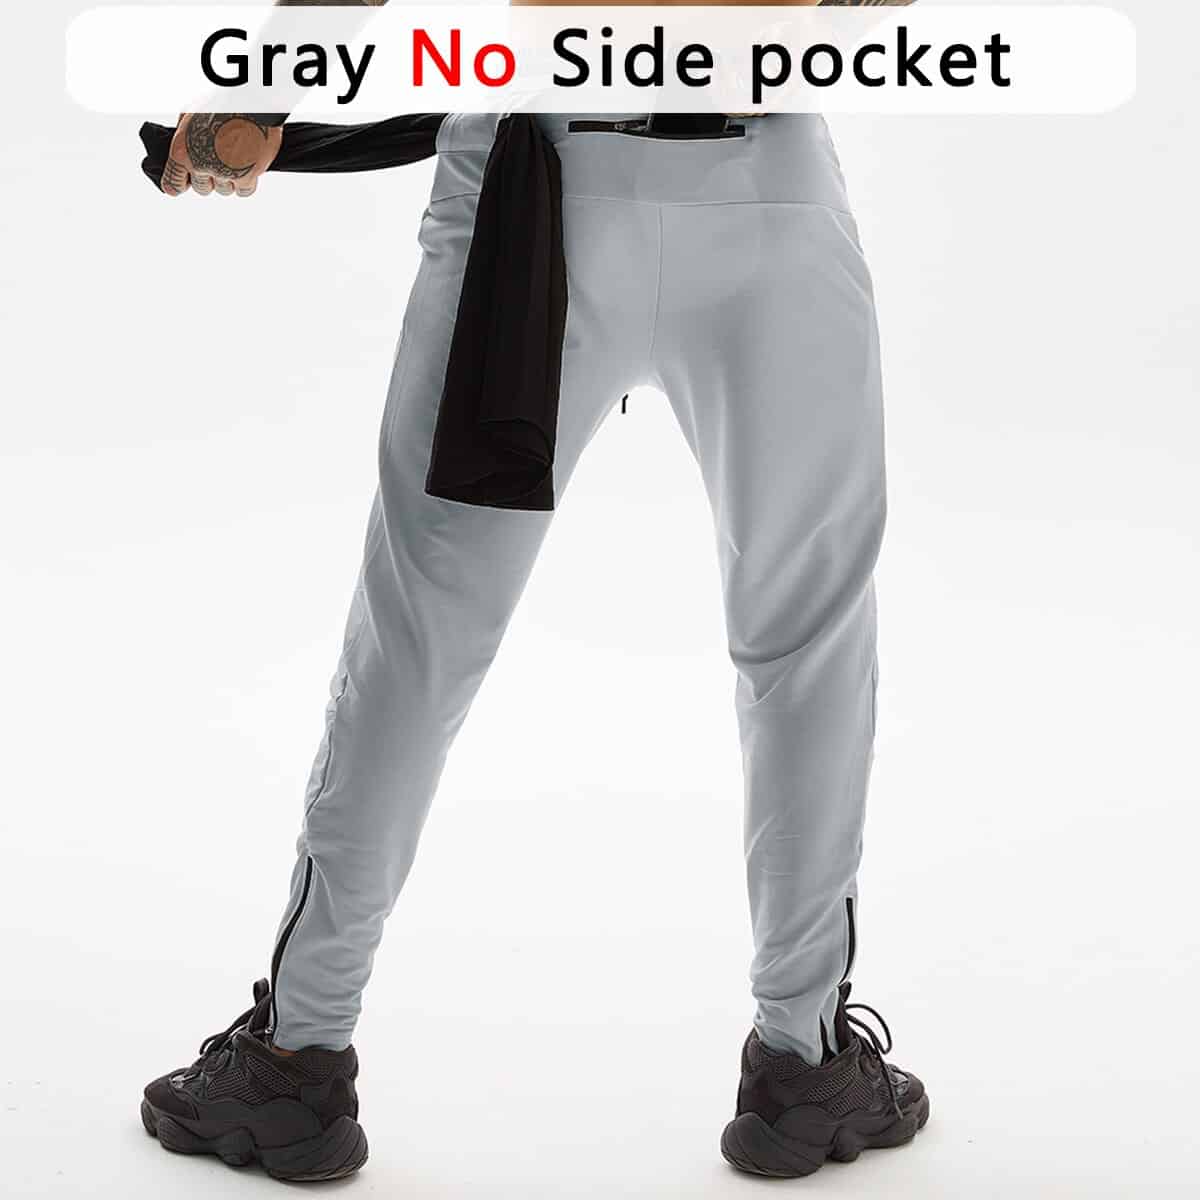 Gray no Side pocket